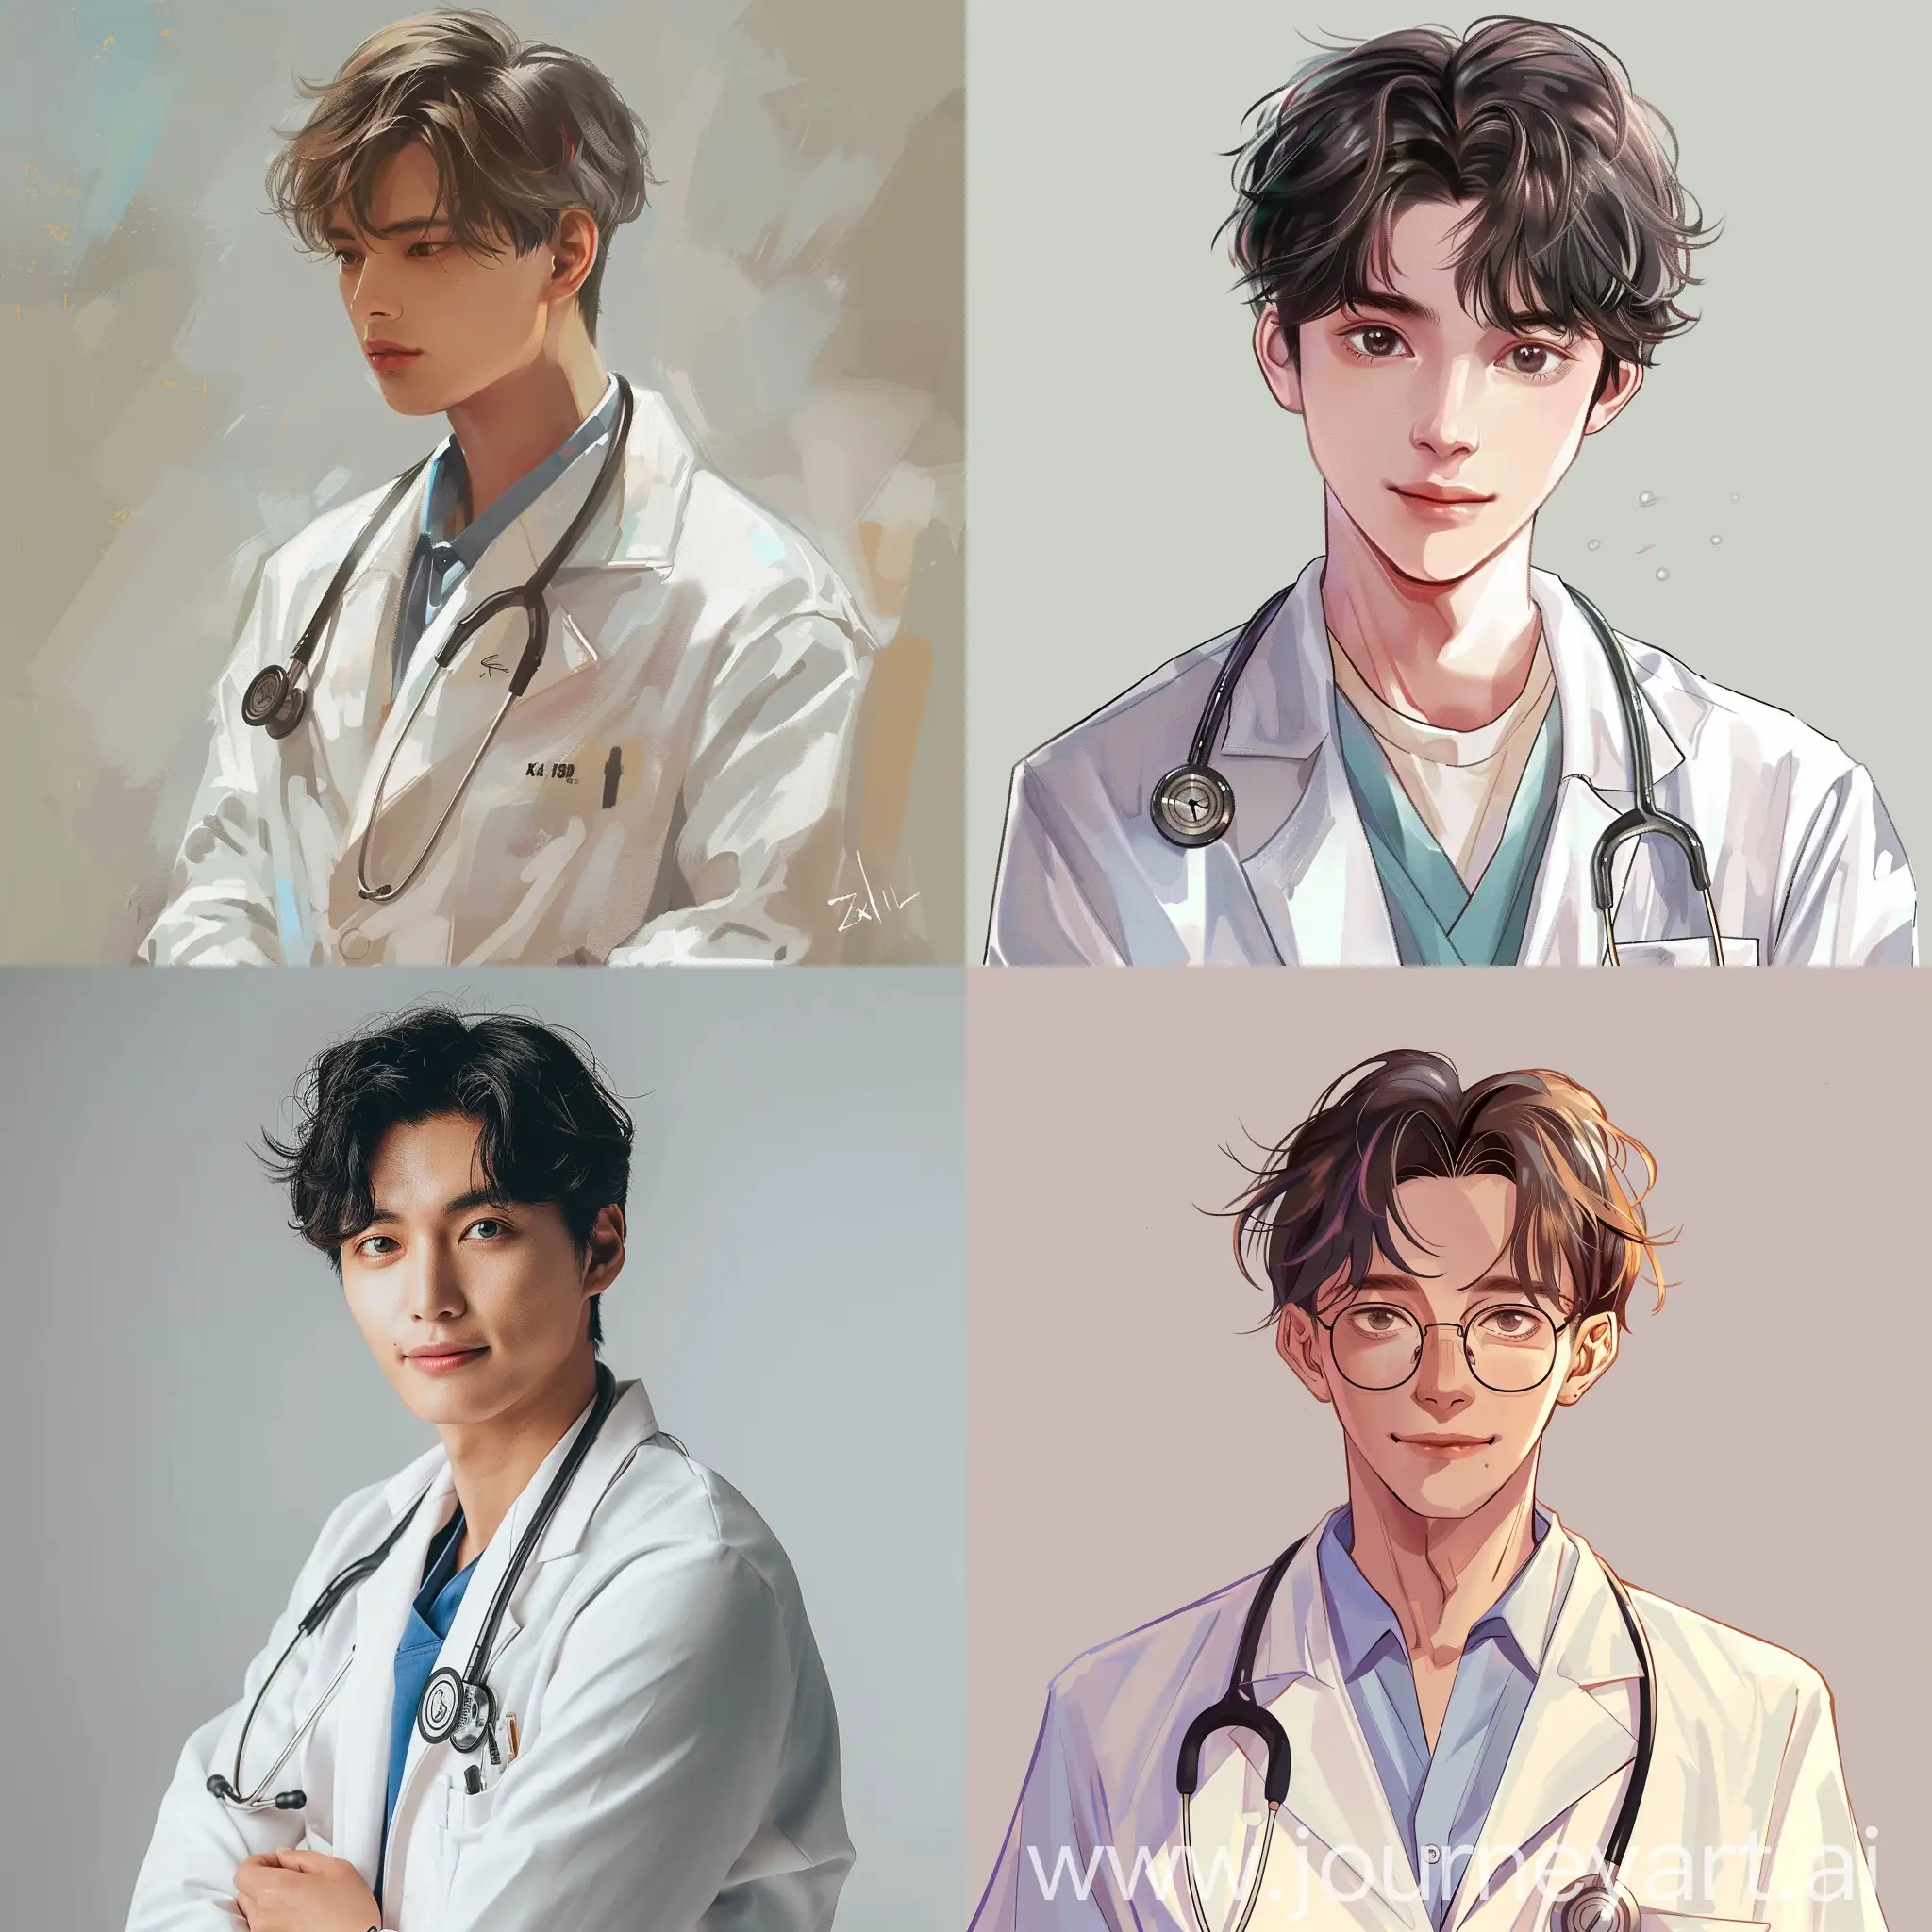 Exo's kai as doctor